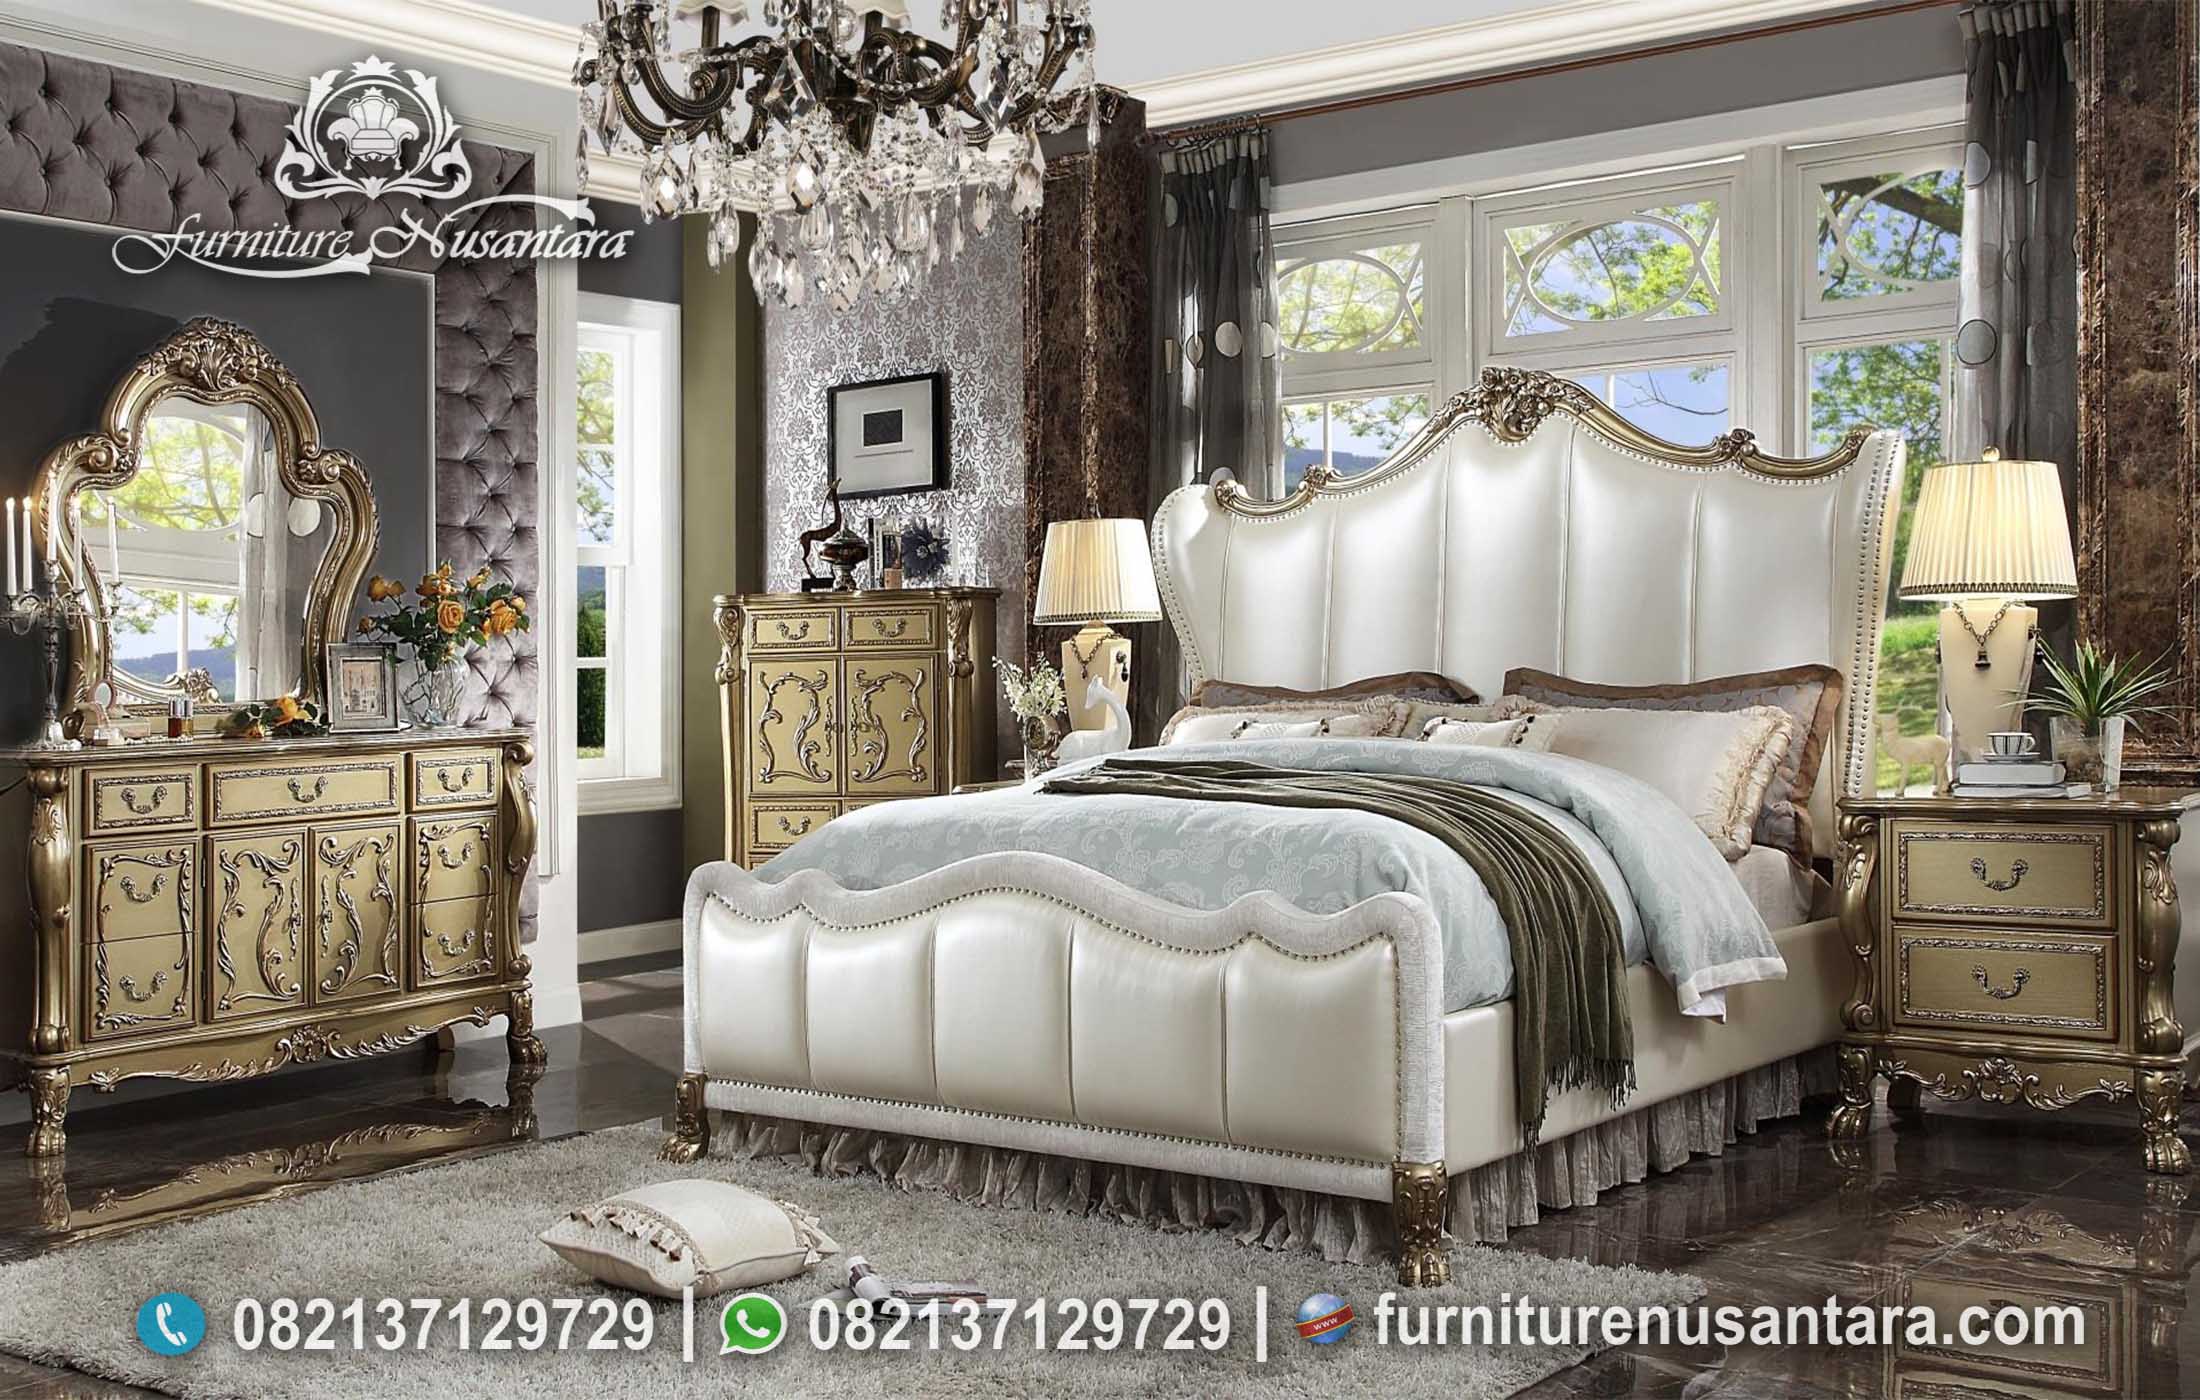 Desain Bedroom Klasik Luxury Queen KS-146, Furniture Nusantara